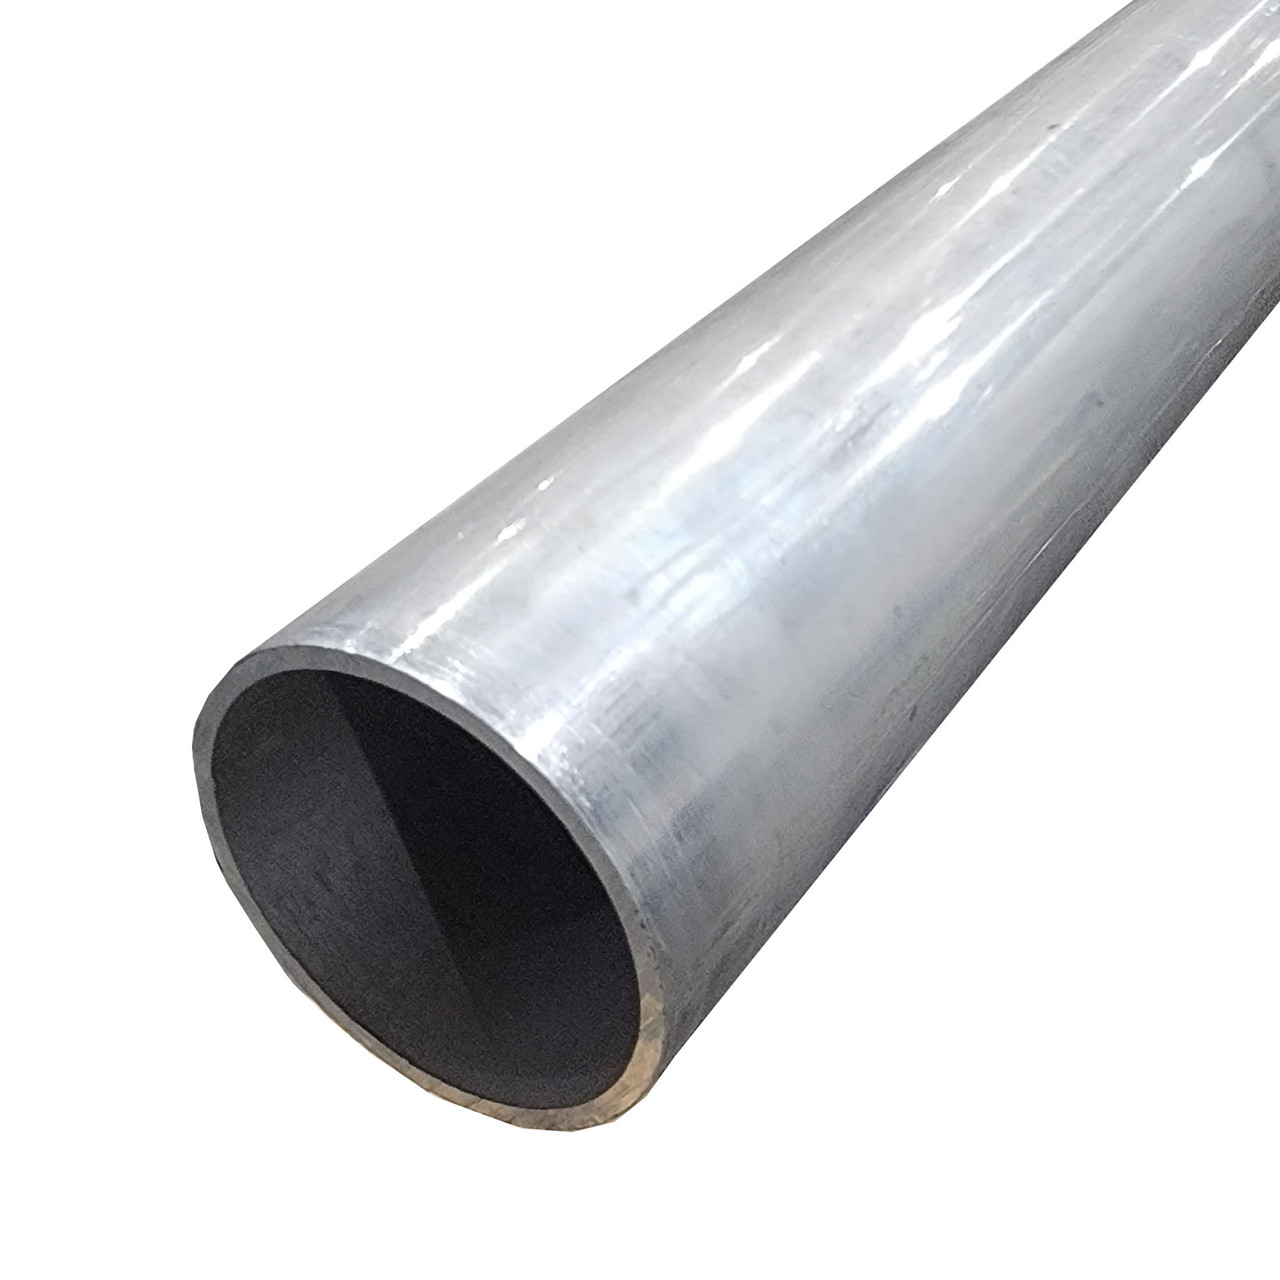 1.75" OD x 0.083" W x 48" , 2024-T3 Aluminum Round Tube